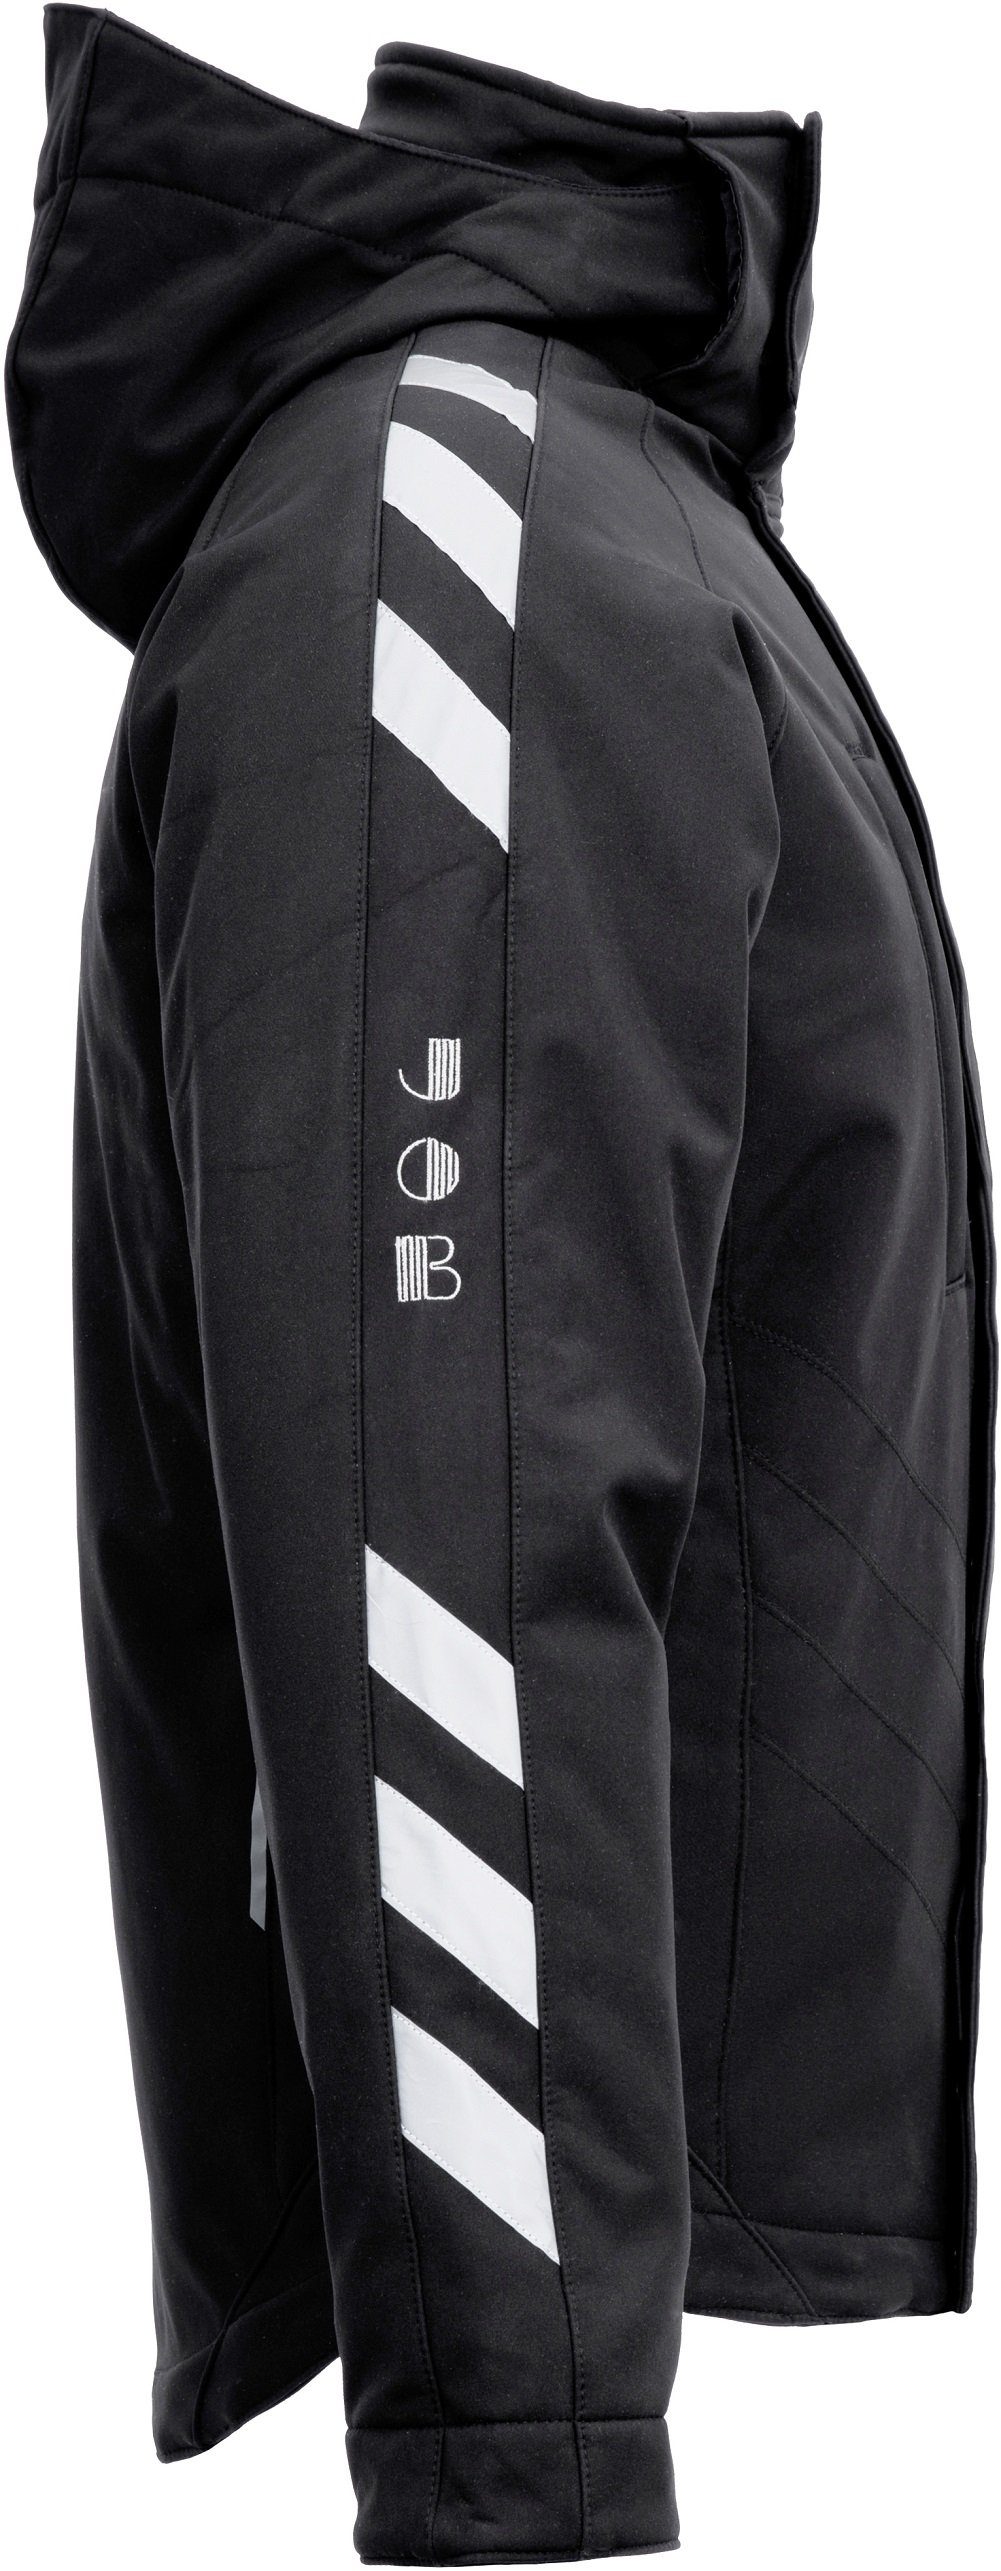 JOB Jacke mit Kapuze, Arbeitsjacke wasserabweisend Shell JOB-Winter-Soft schwarz winddicht,